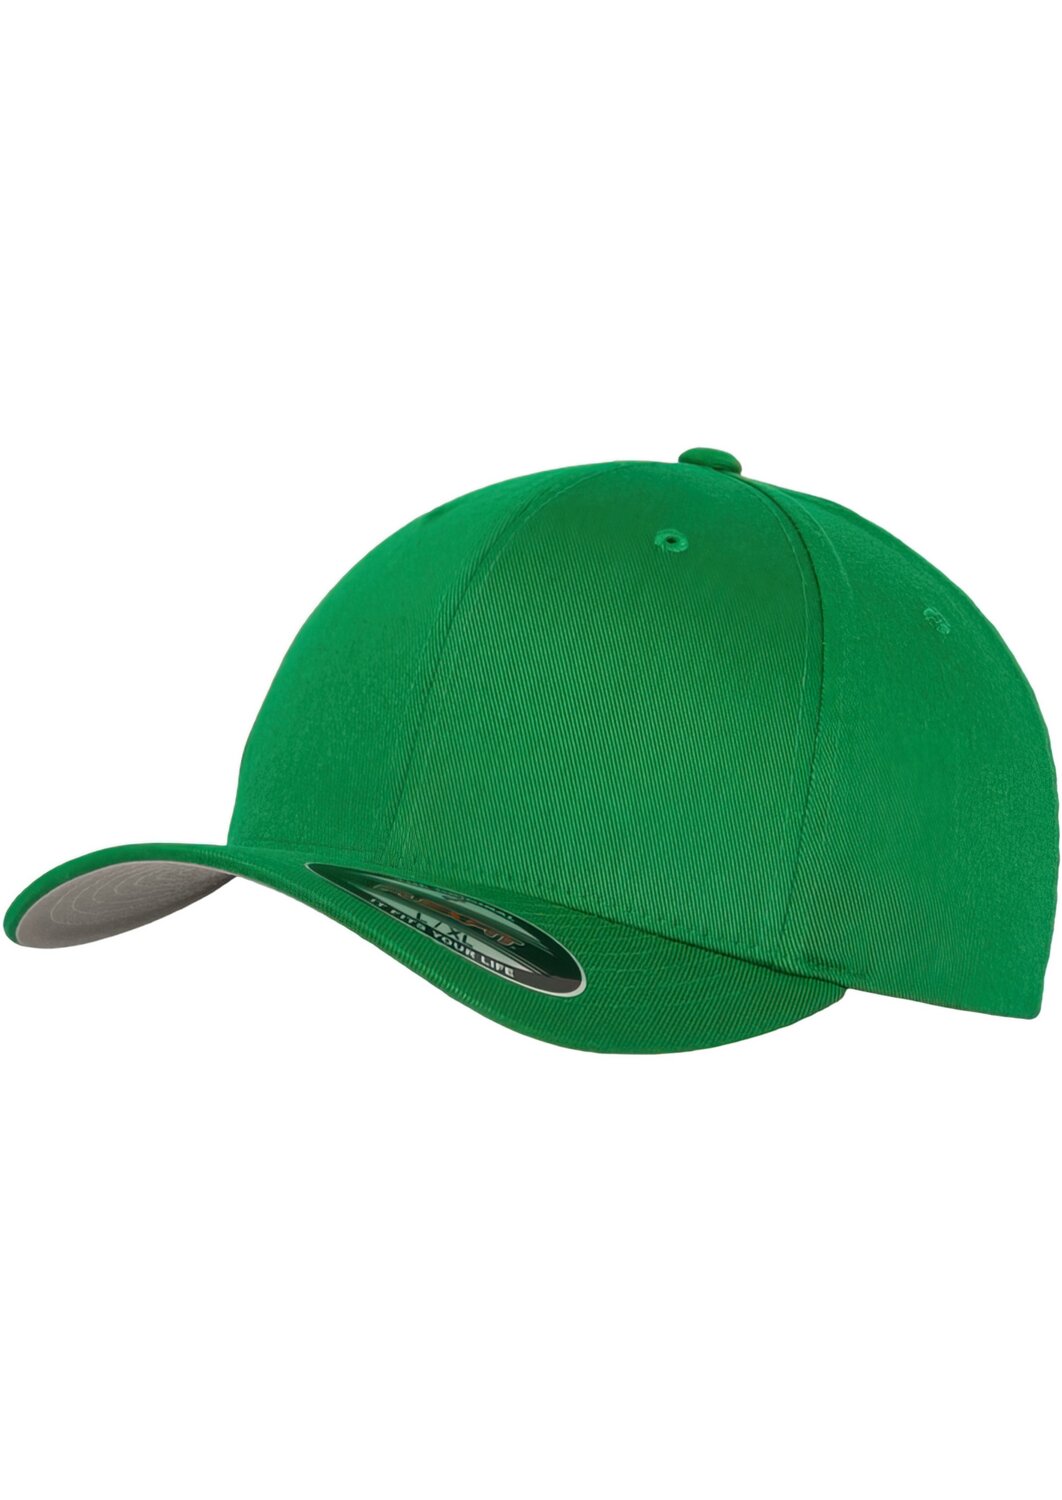 Baseball Cap Wooly Combed | Flexfit green MAXISCOOT pepper